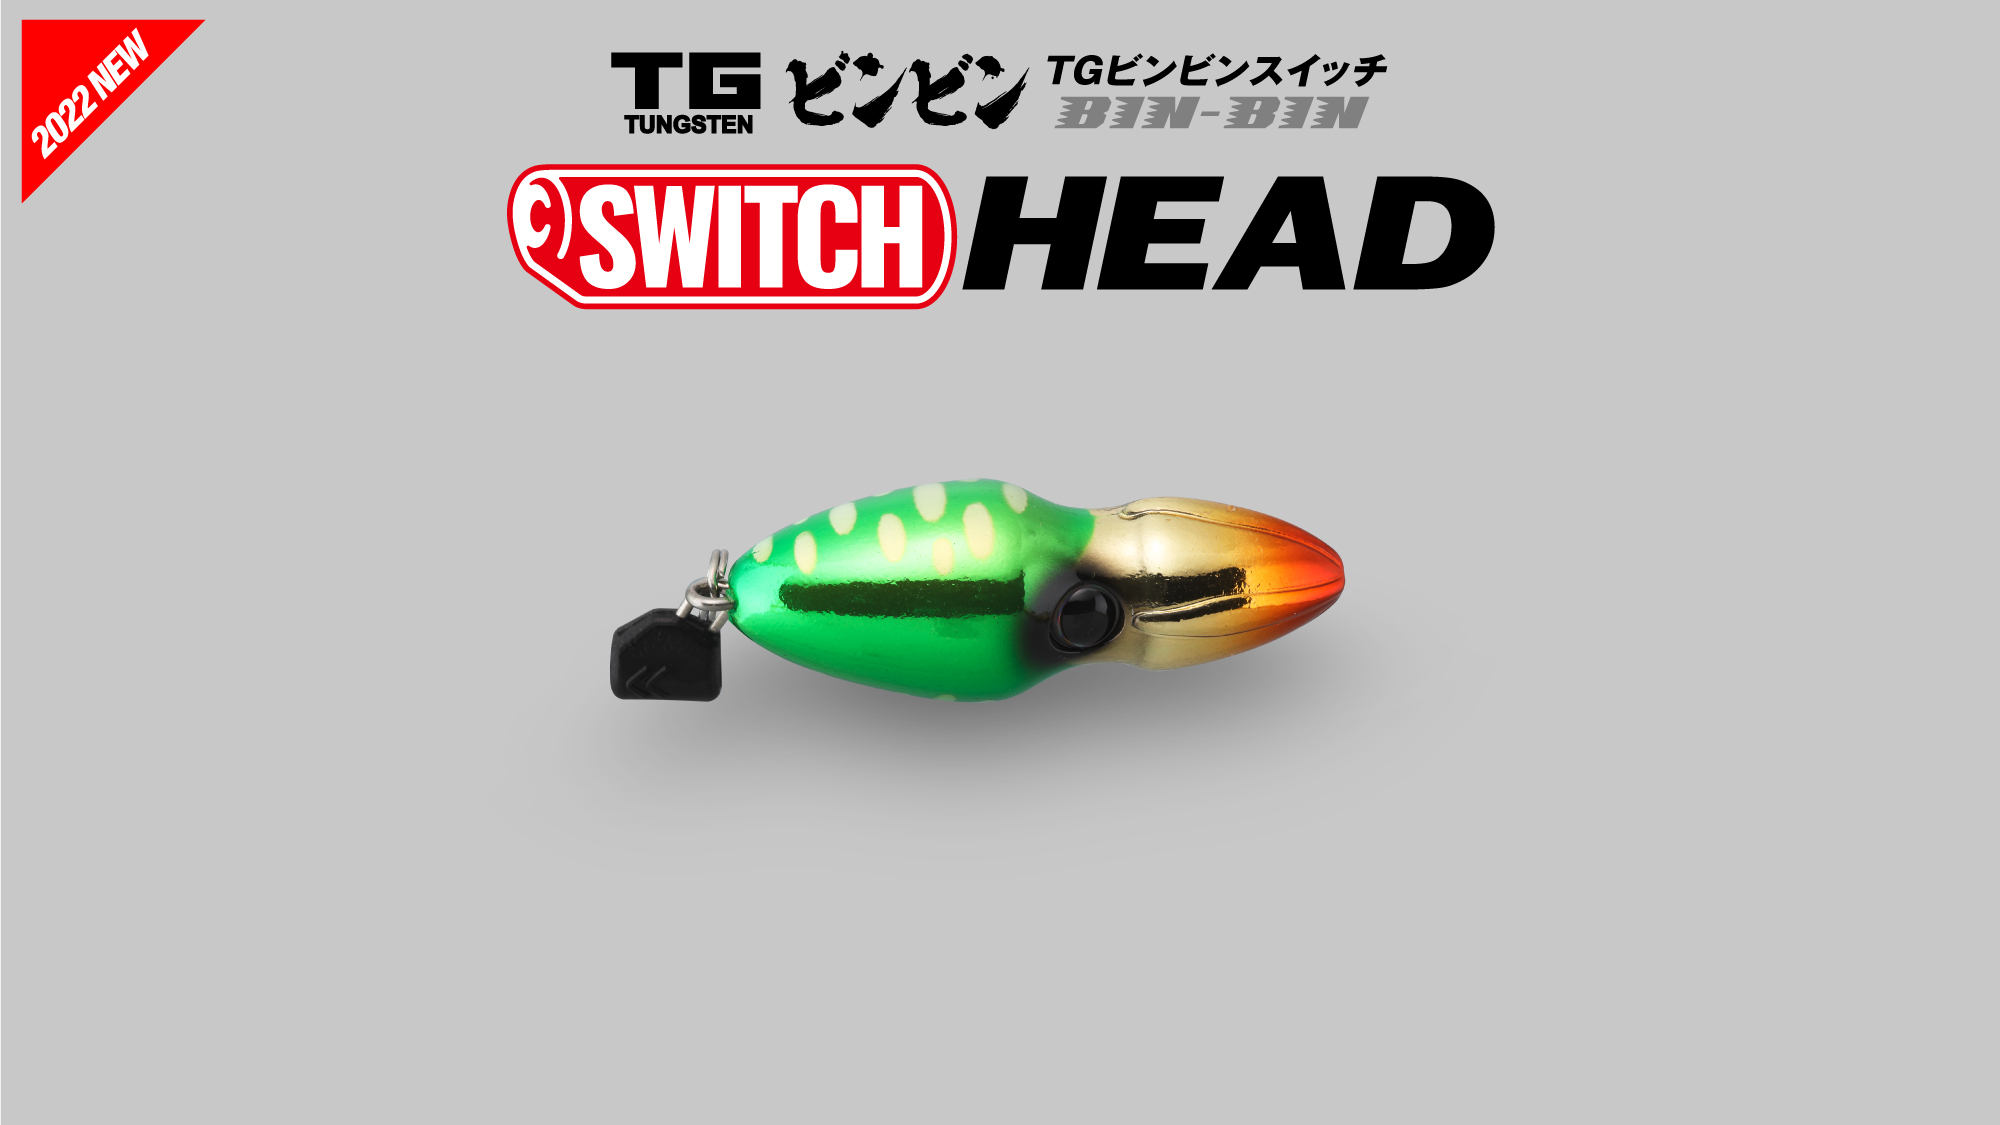  TG BINBIN SWITCH HEAD / TGビンビンスイッチ ヘッド